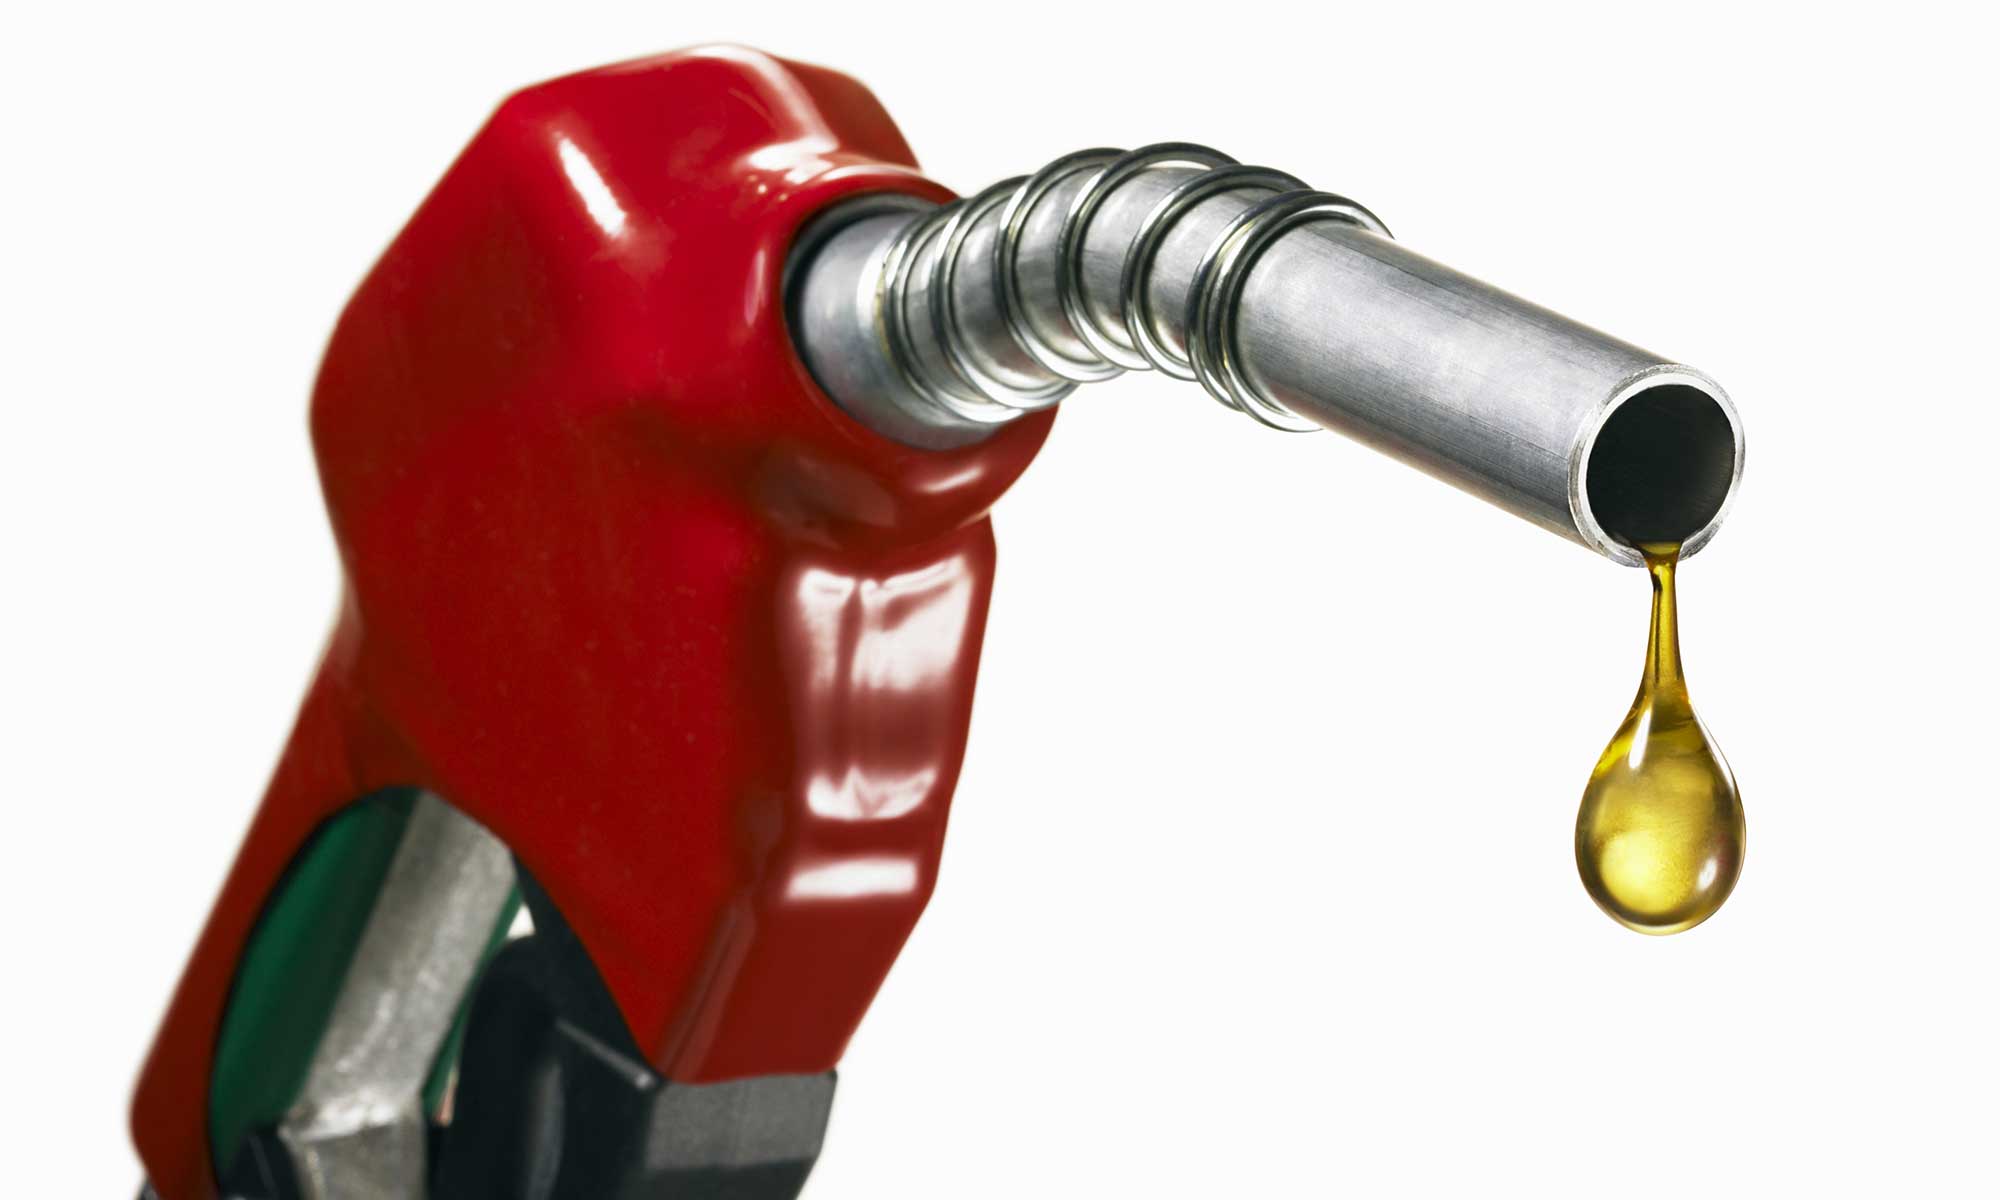 petrol diesel price à®à¯à®à®¾à®© à®ªà® à®®à¯à®à®¿à®µà¯